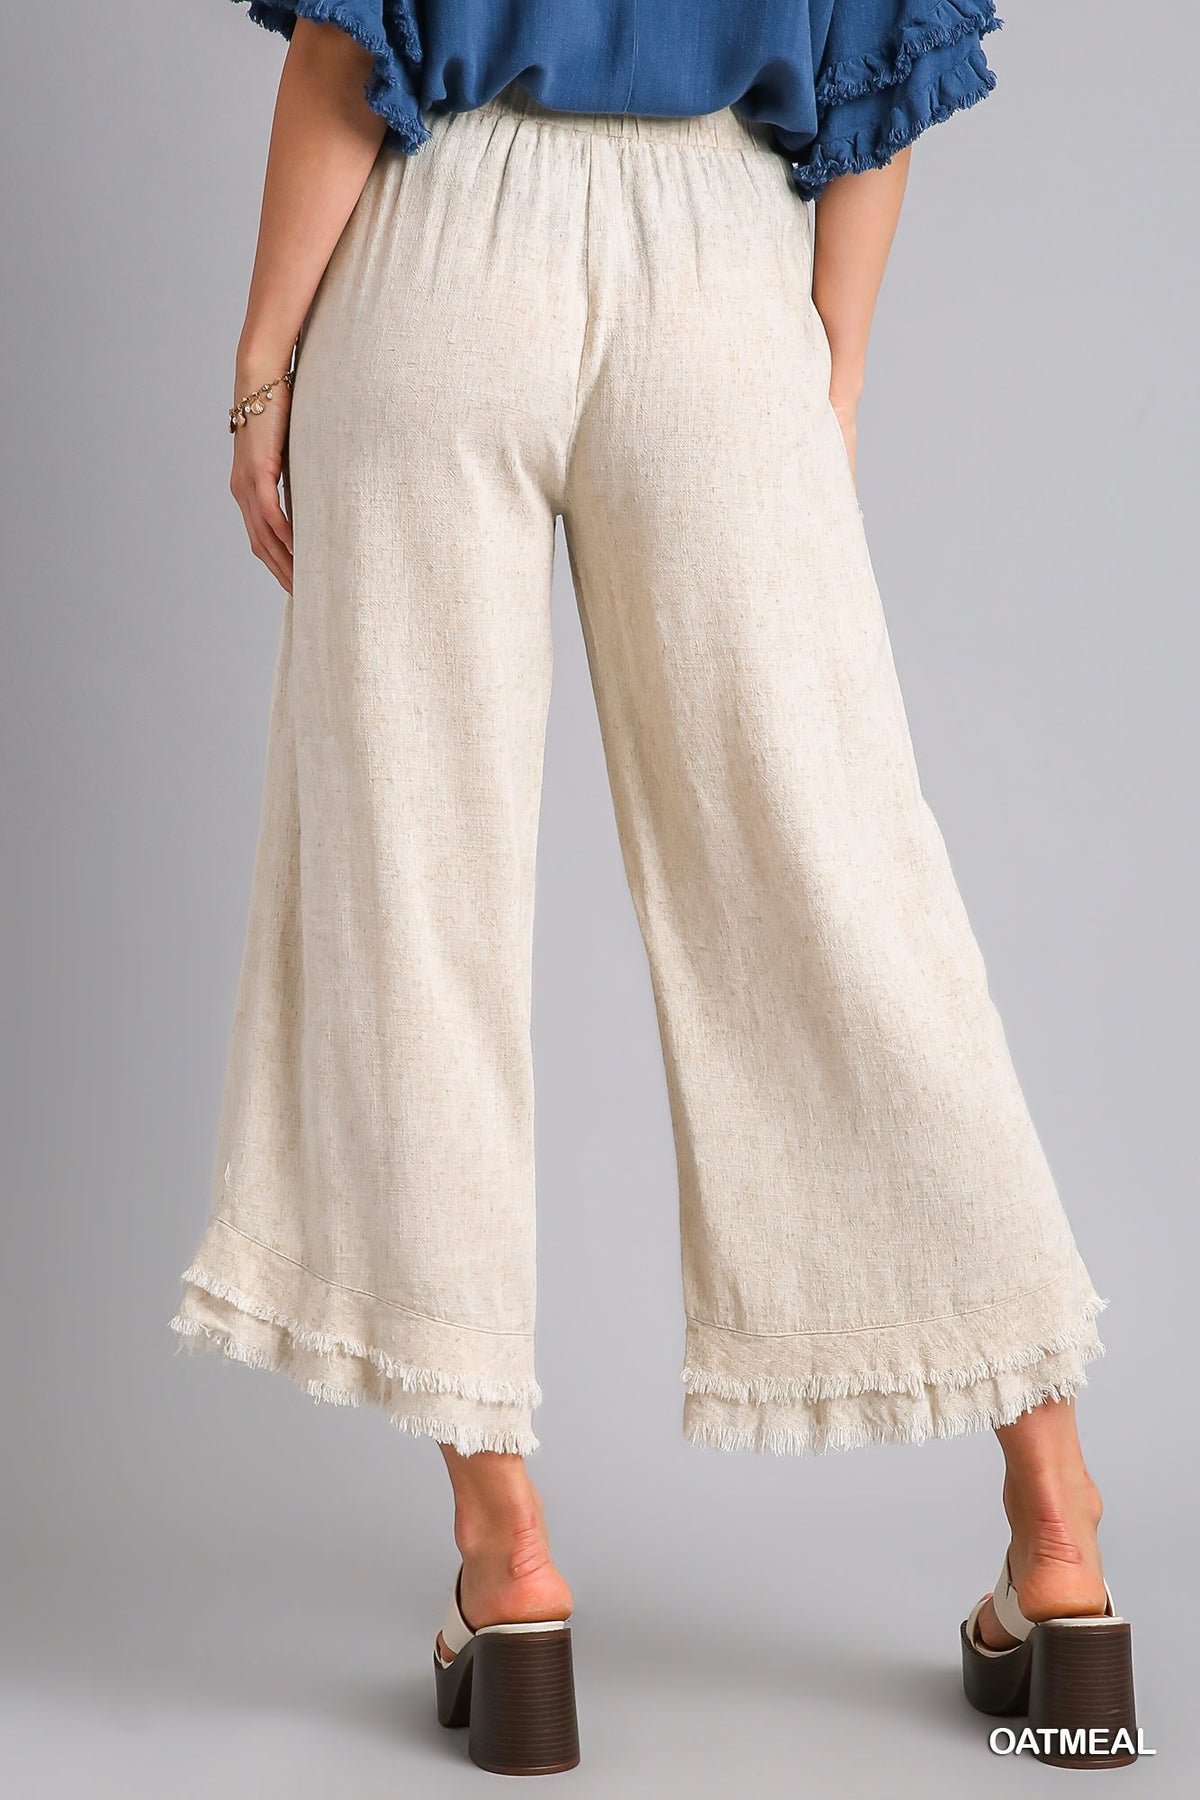 Adalyn Linen Pants - KC Outfitter